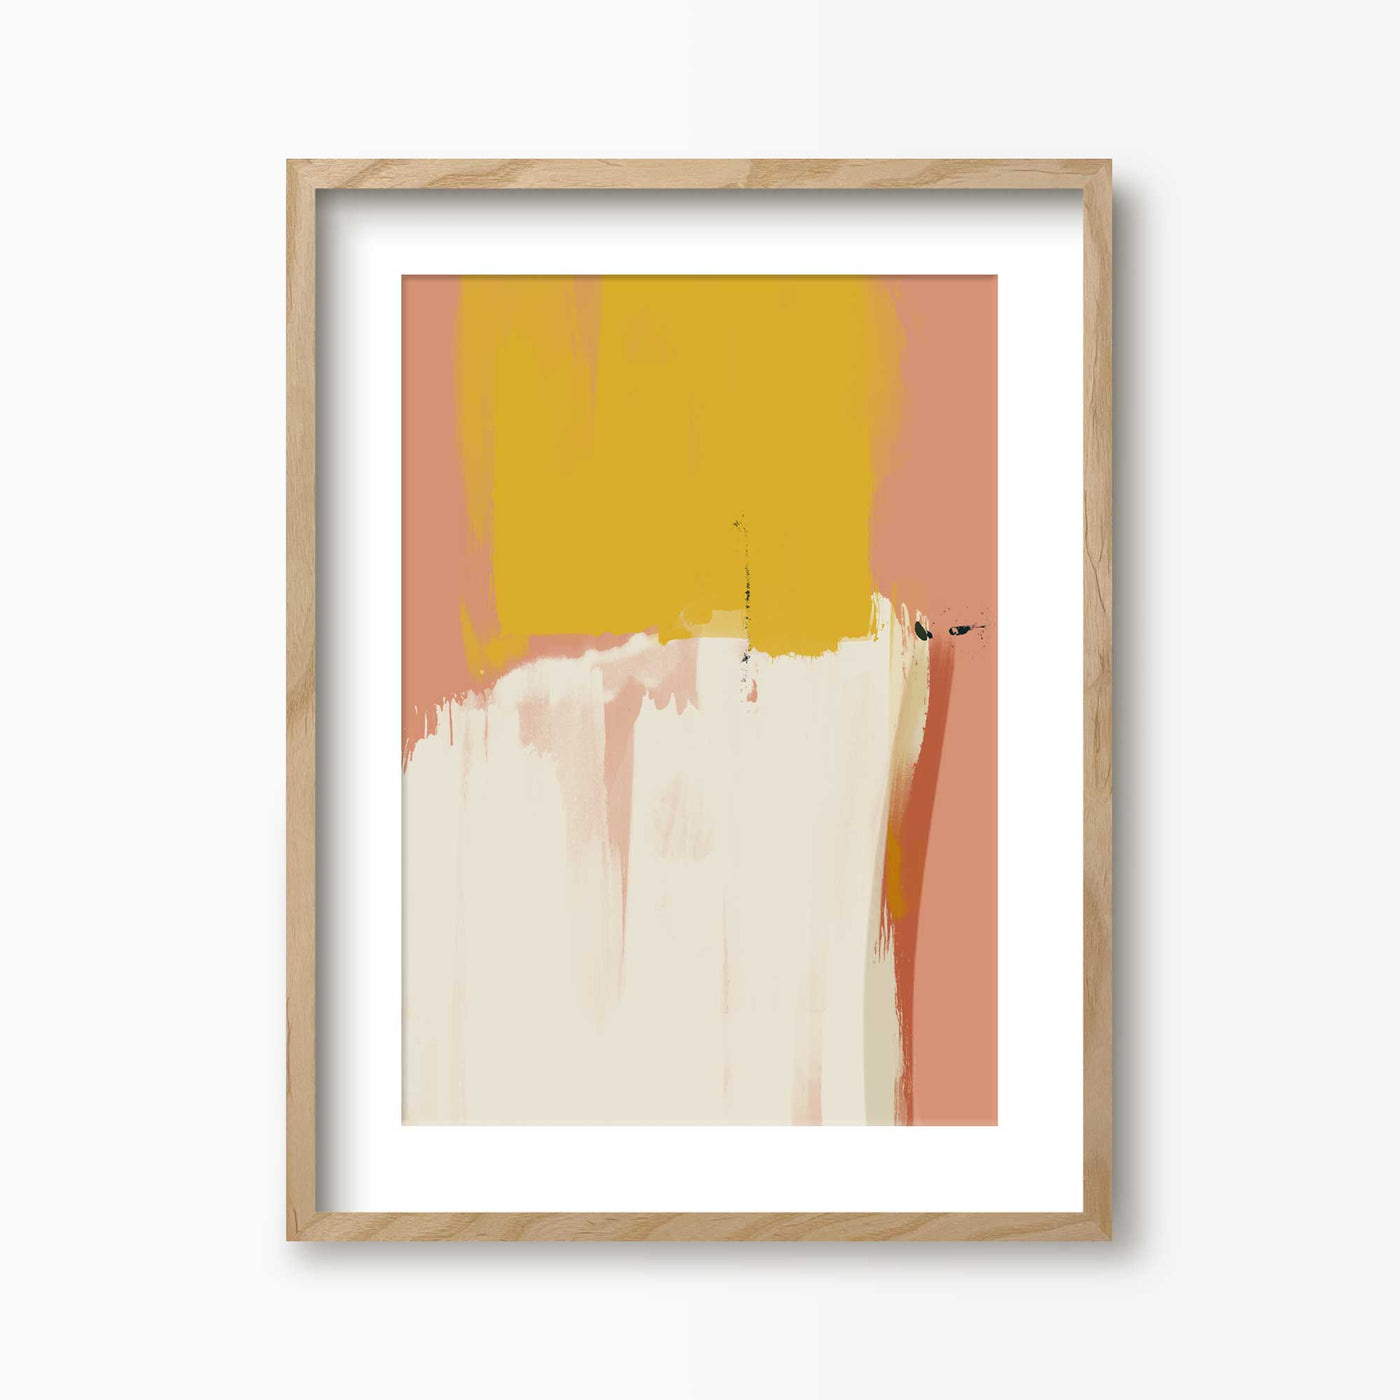 Green Lili 30x40cm (12x16") / Natural Frame + Mount Pink & Yellow Abstract Art Print